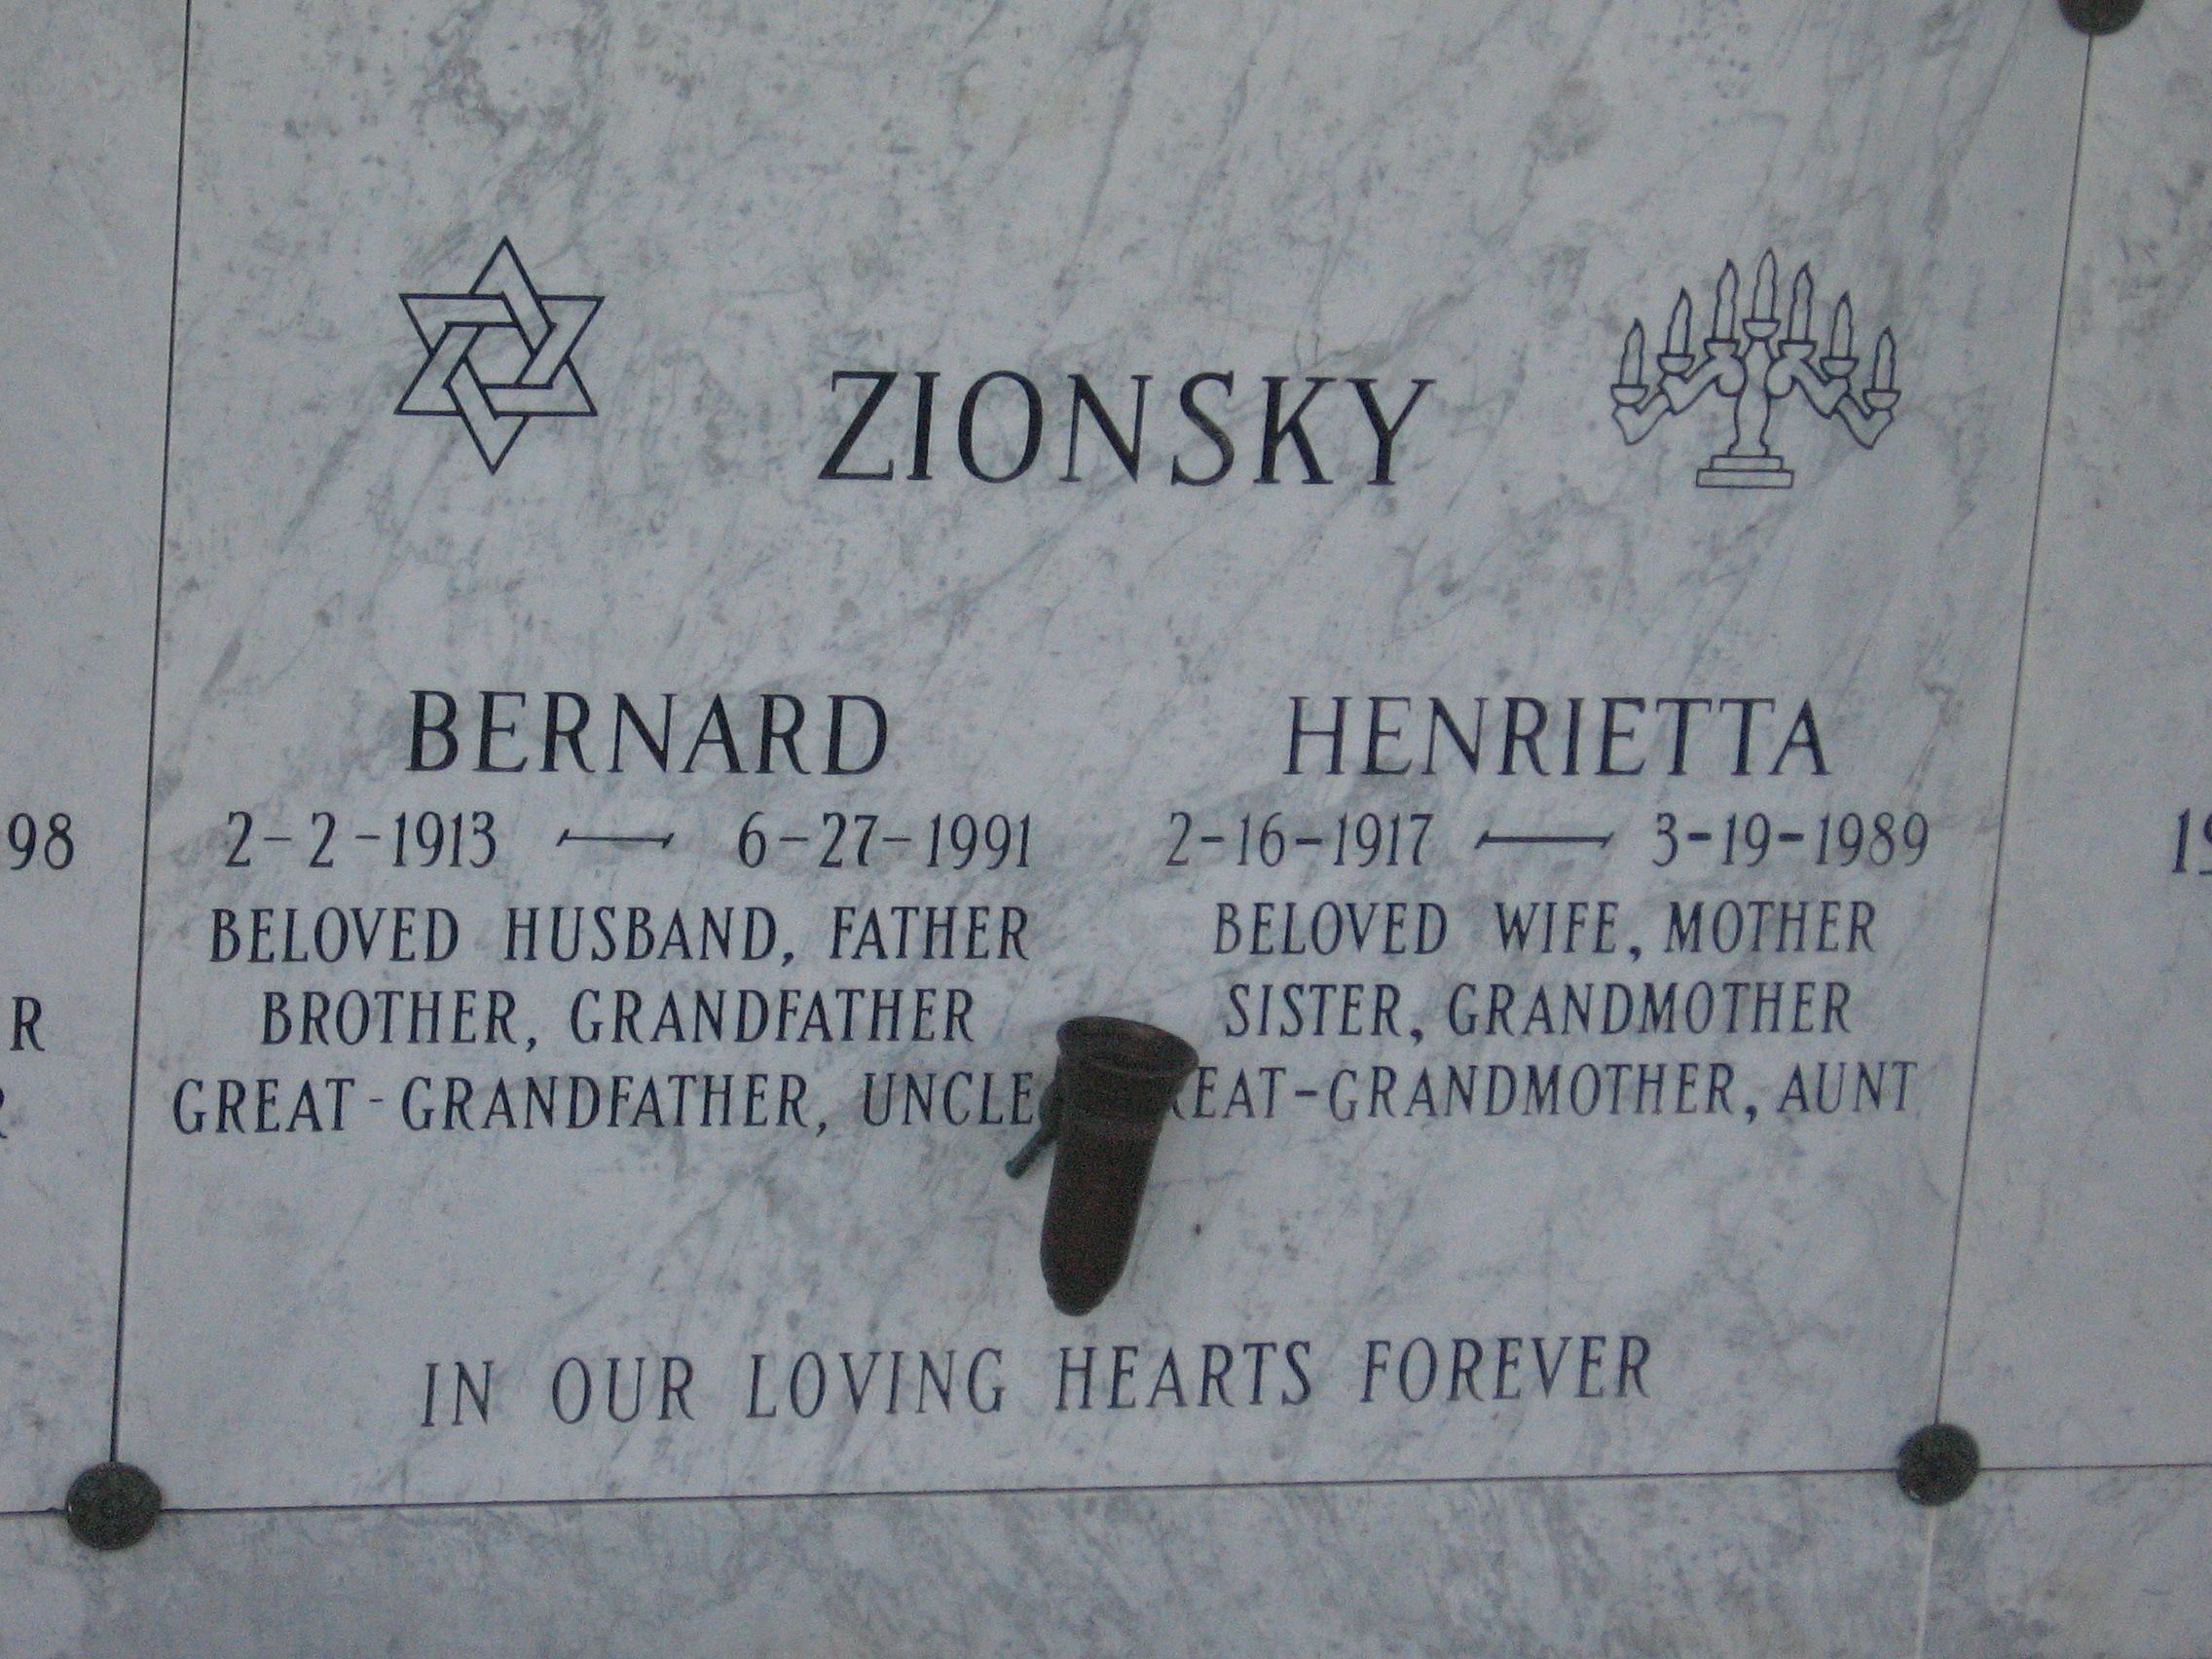 Bernard Zionsky